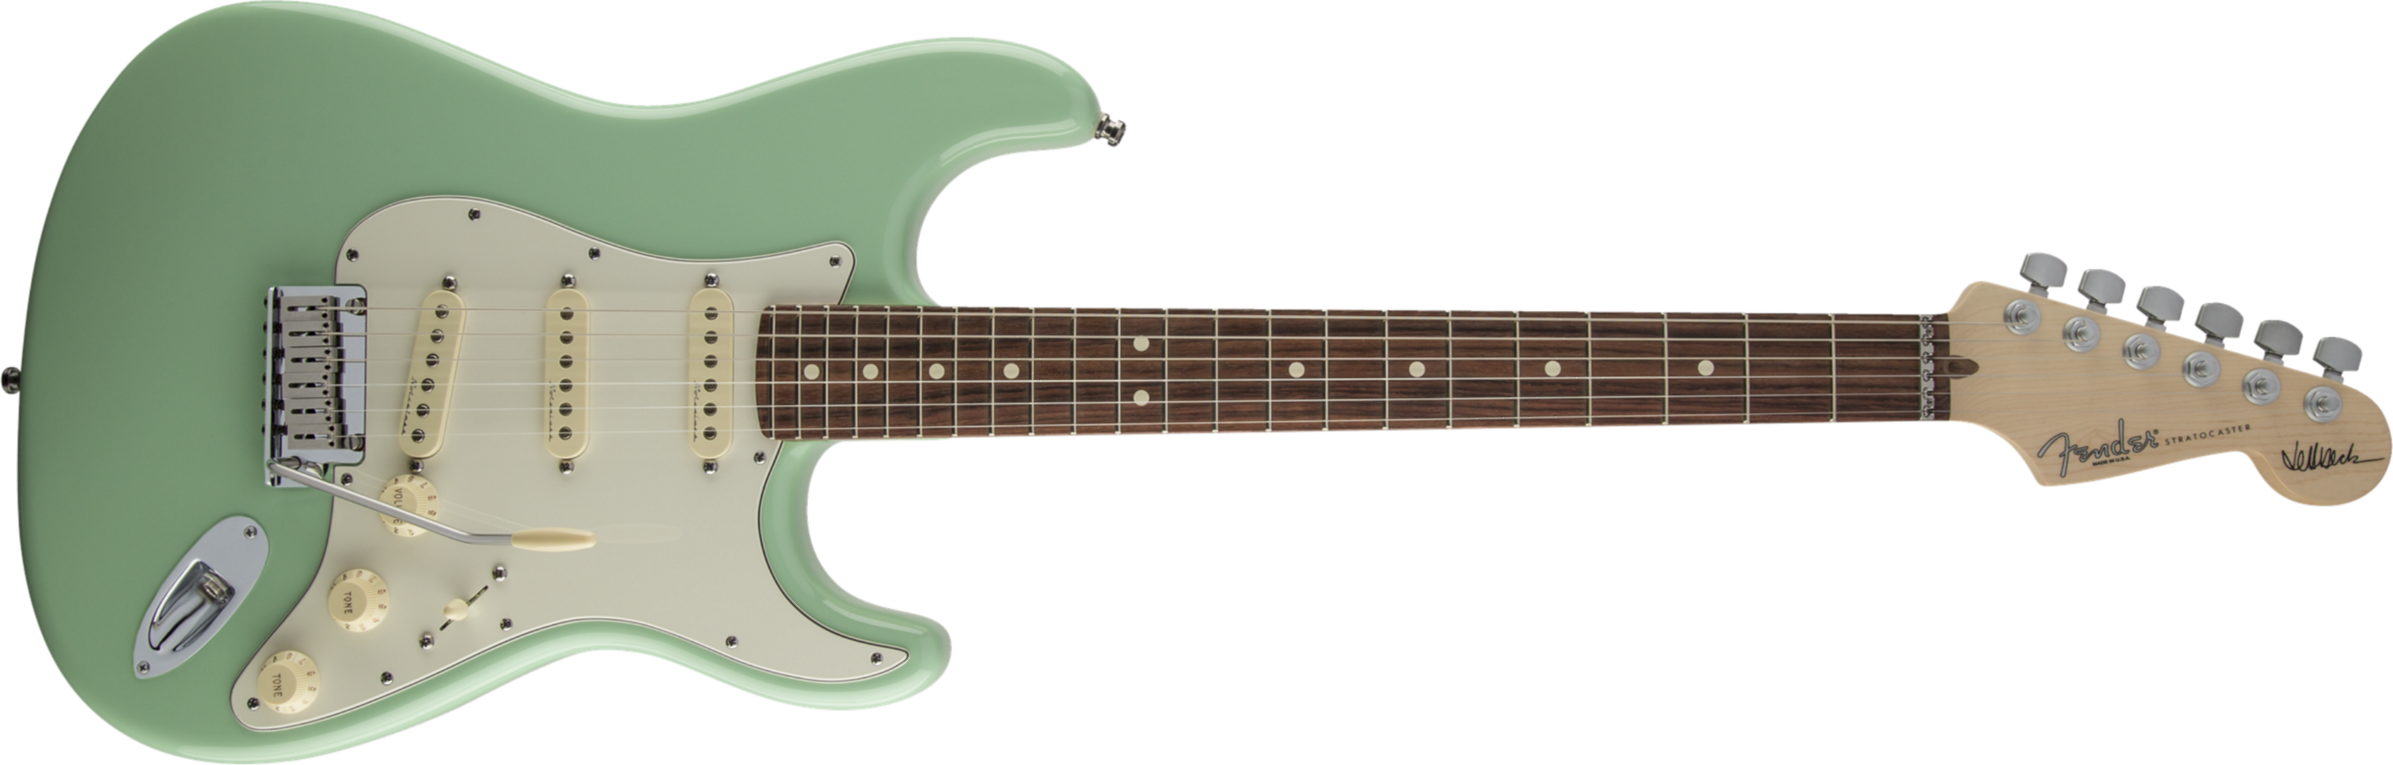 Fender Stratocaster Jeff Beck - Surf Green - Str shape electric guitar - Main picture